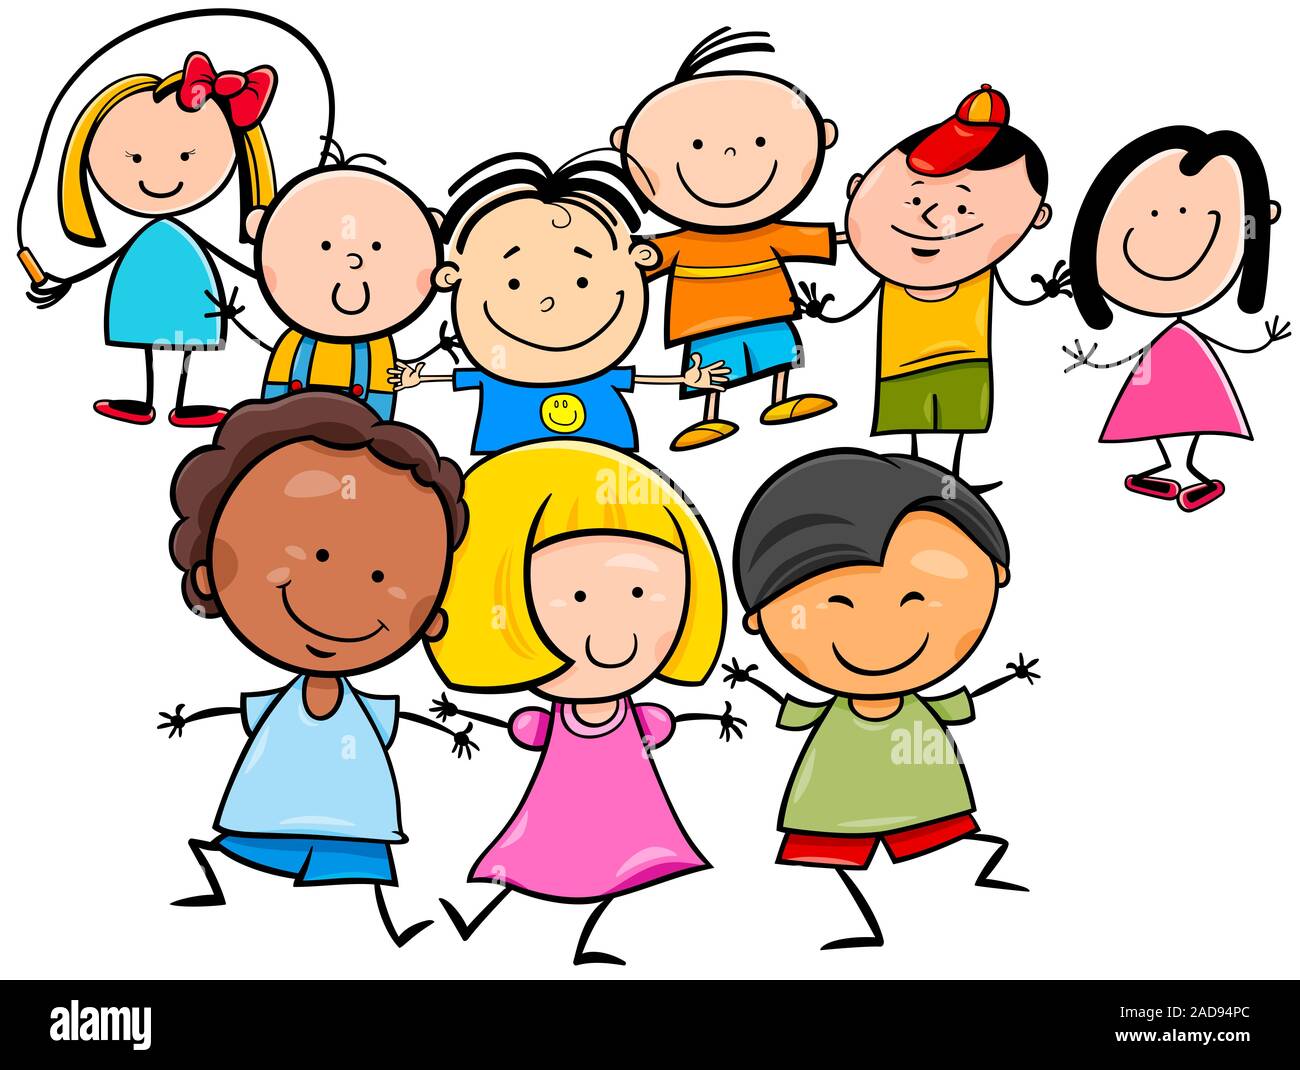 happy kids cartoon characters group Stock Photo - Alamy